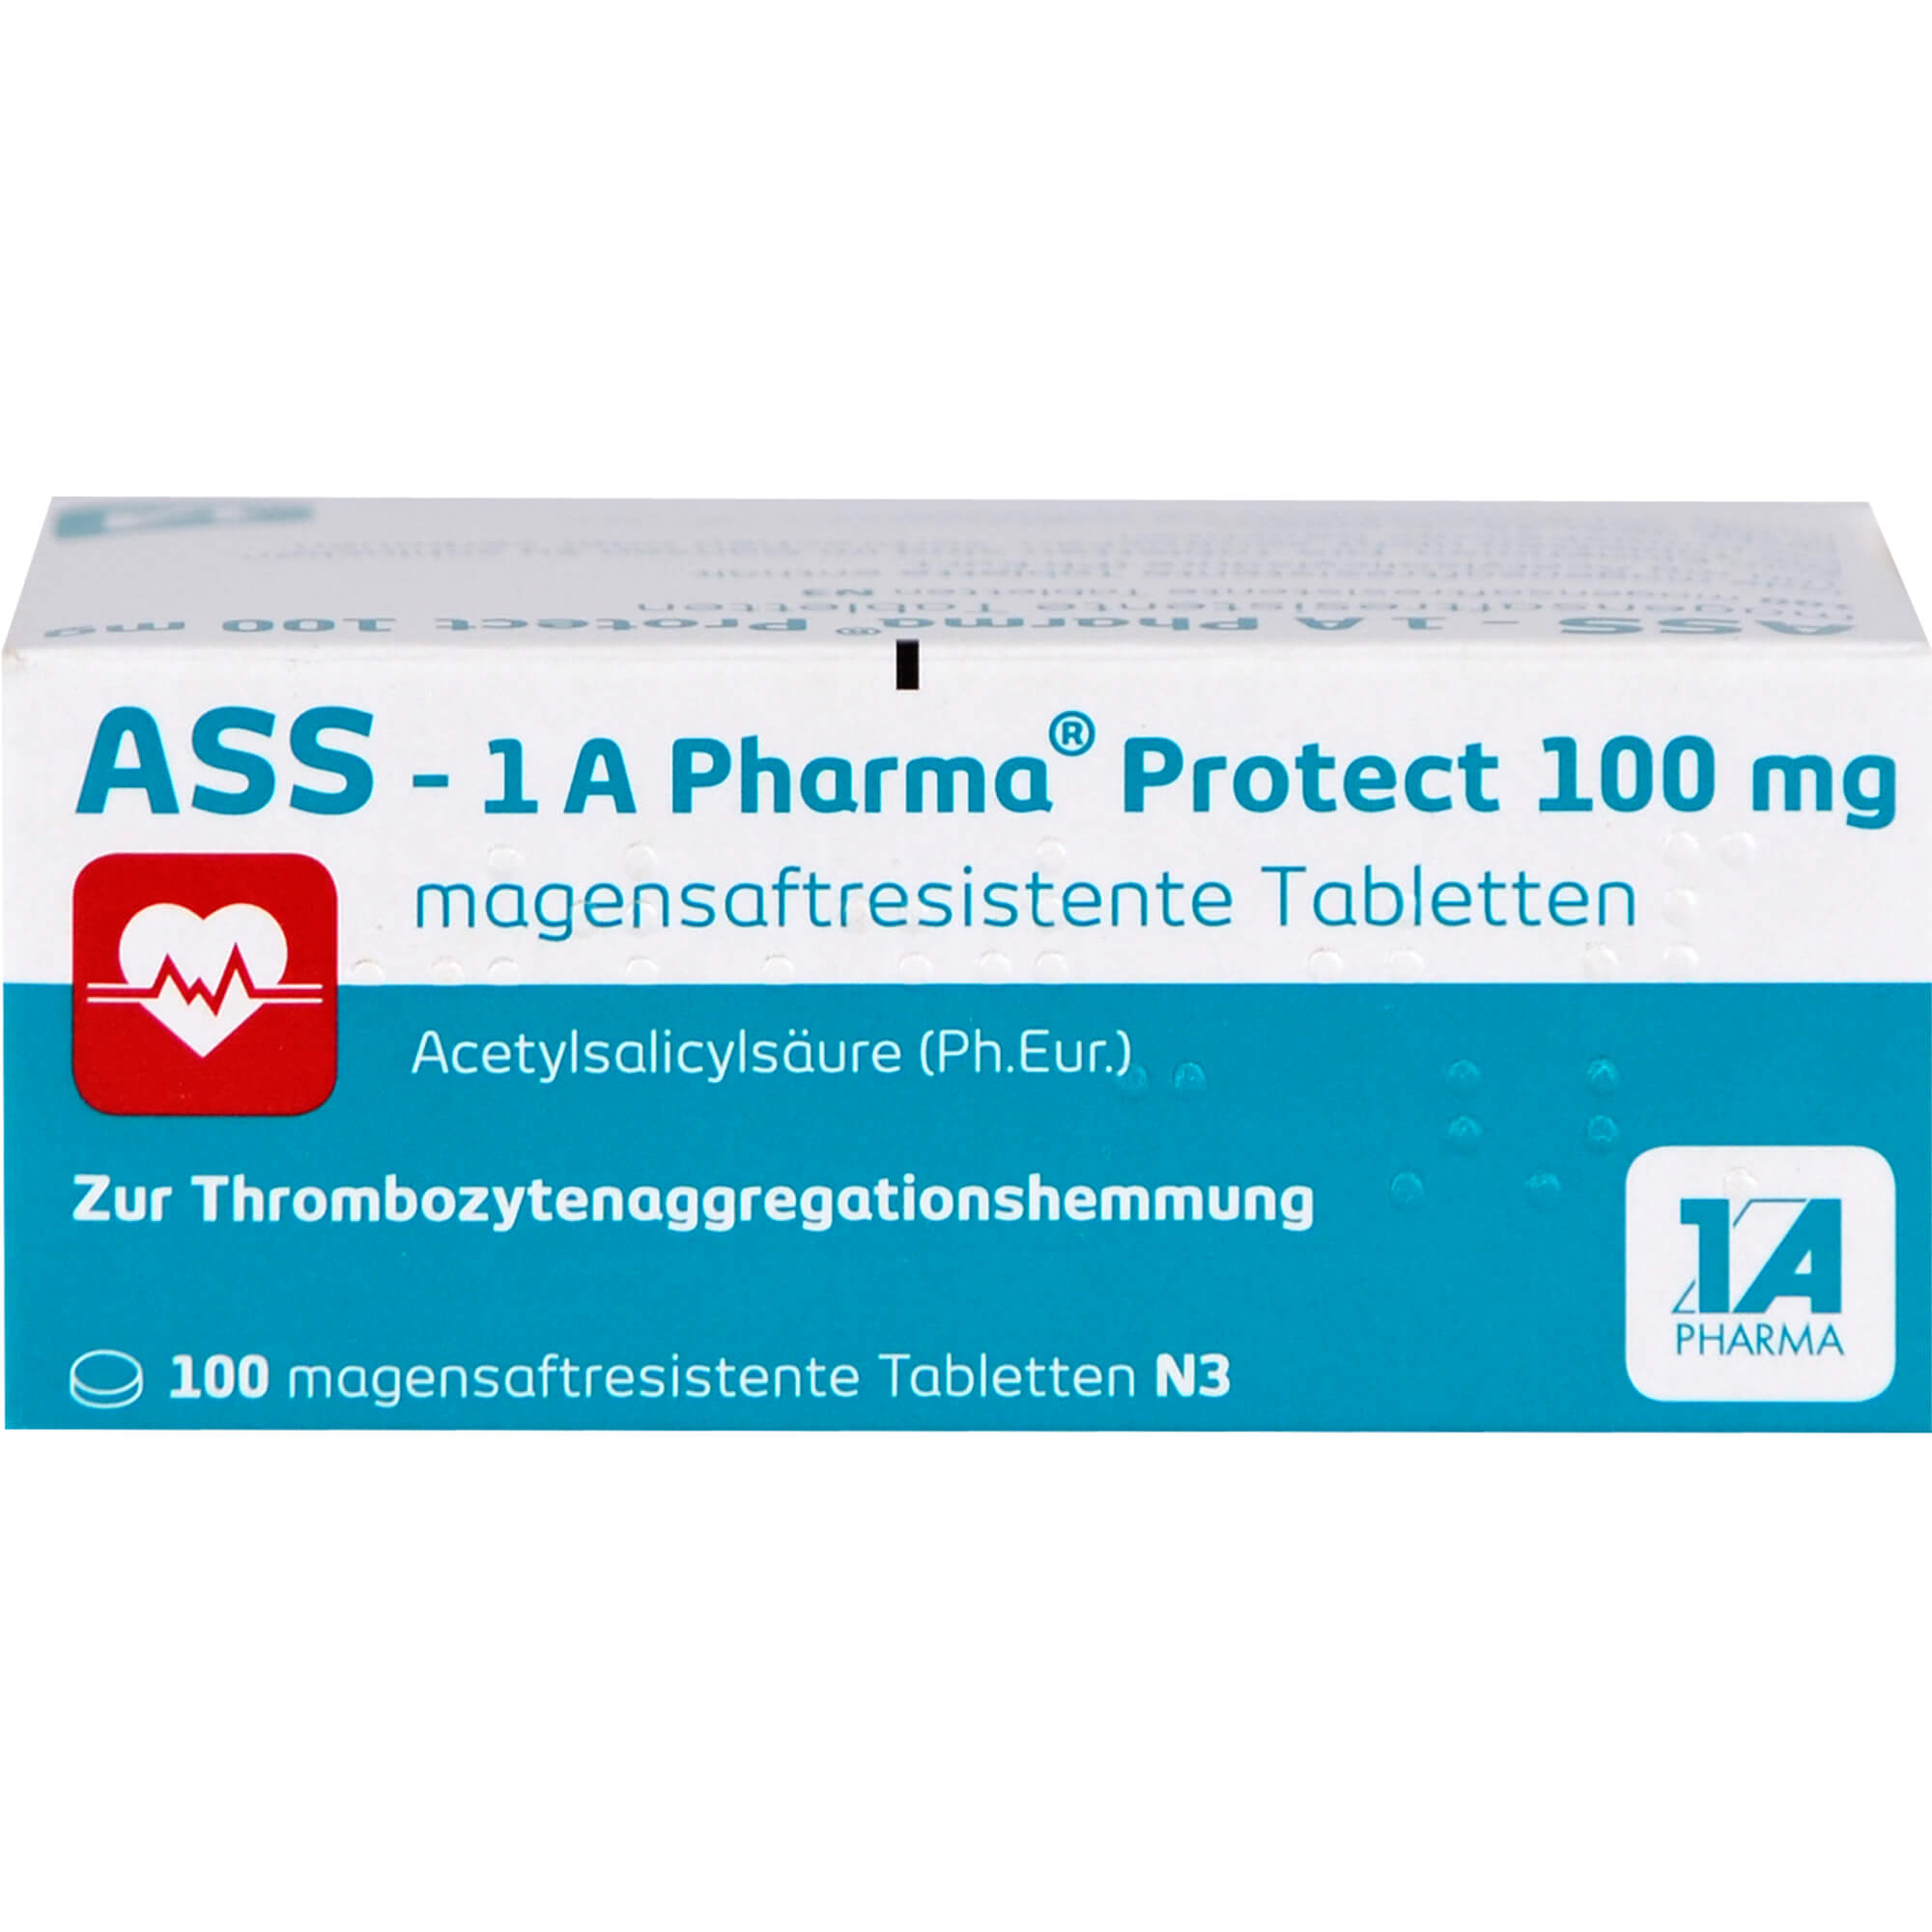 ASS-1A-Pharma-Protect-100-mg-magensaftr-Tabletten